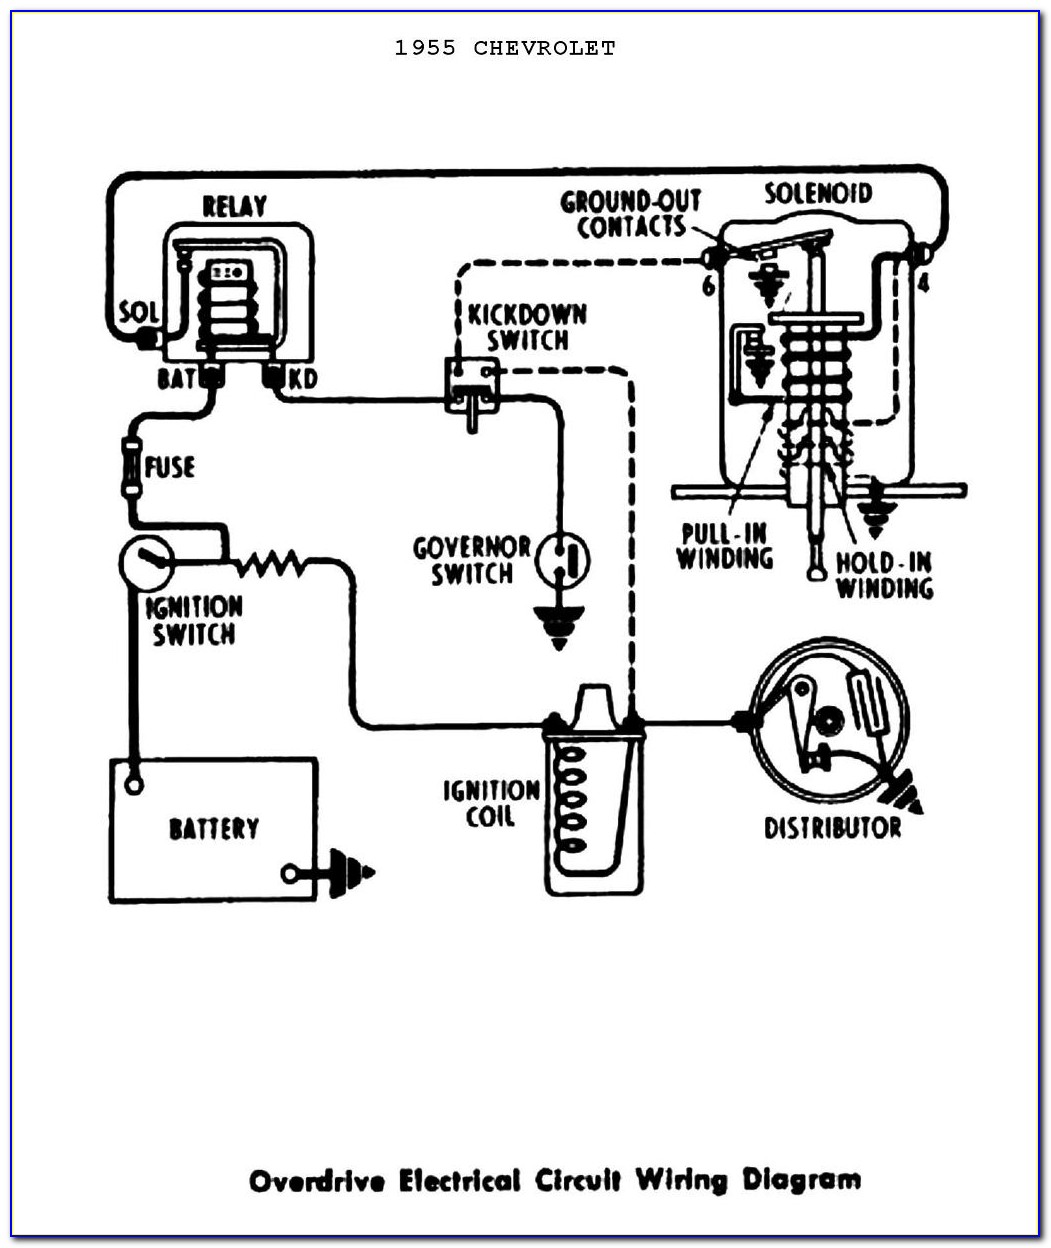 Msd Hei Distributor Wiring Diagram